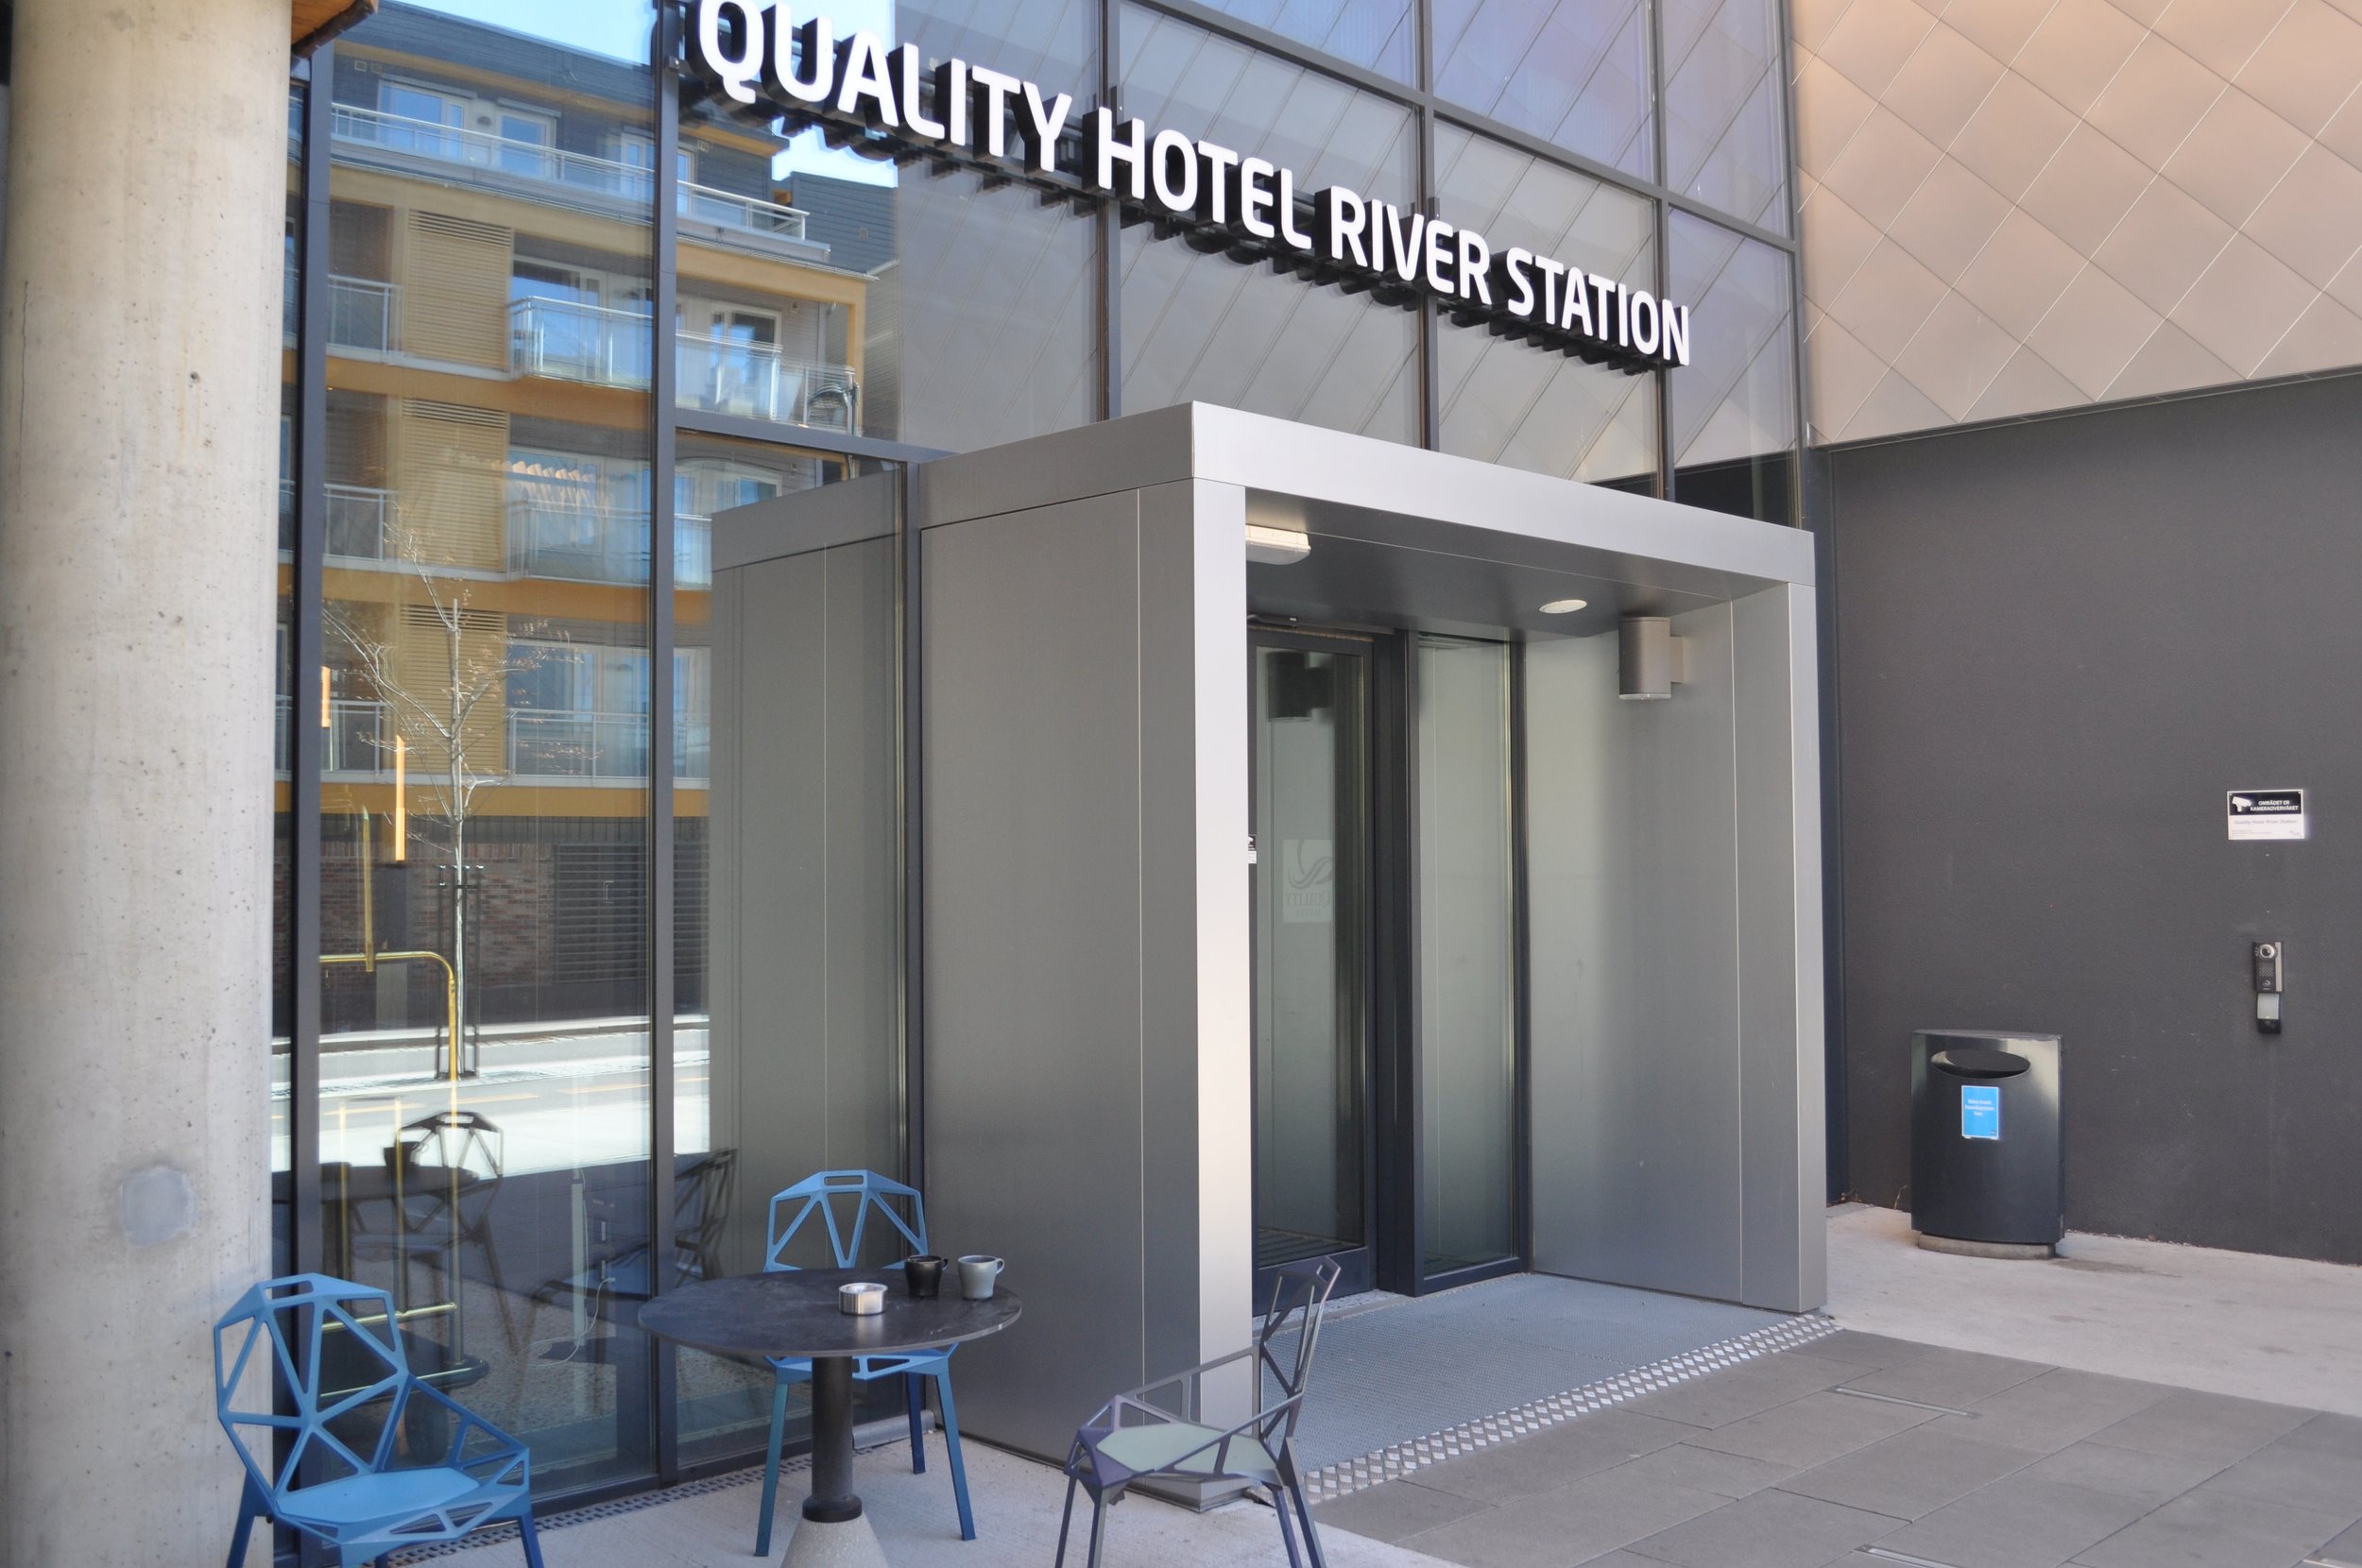 Quality Hotel River station DSC_1115.JPG